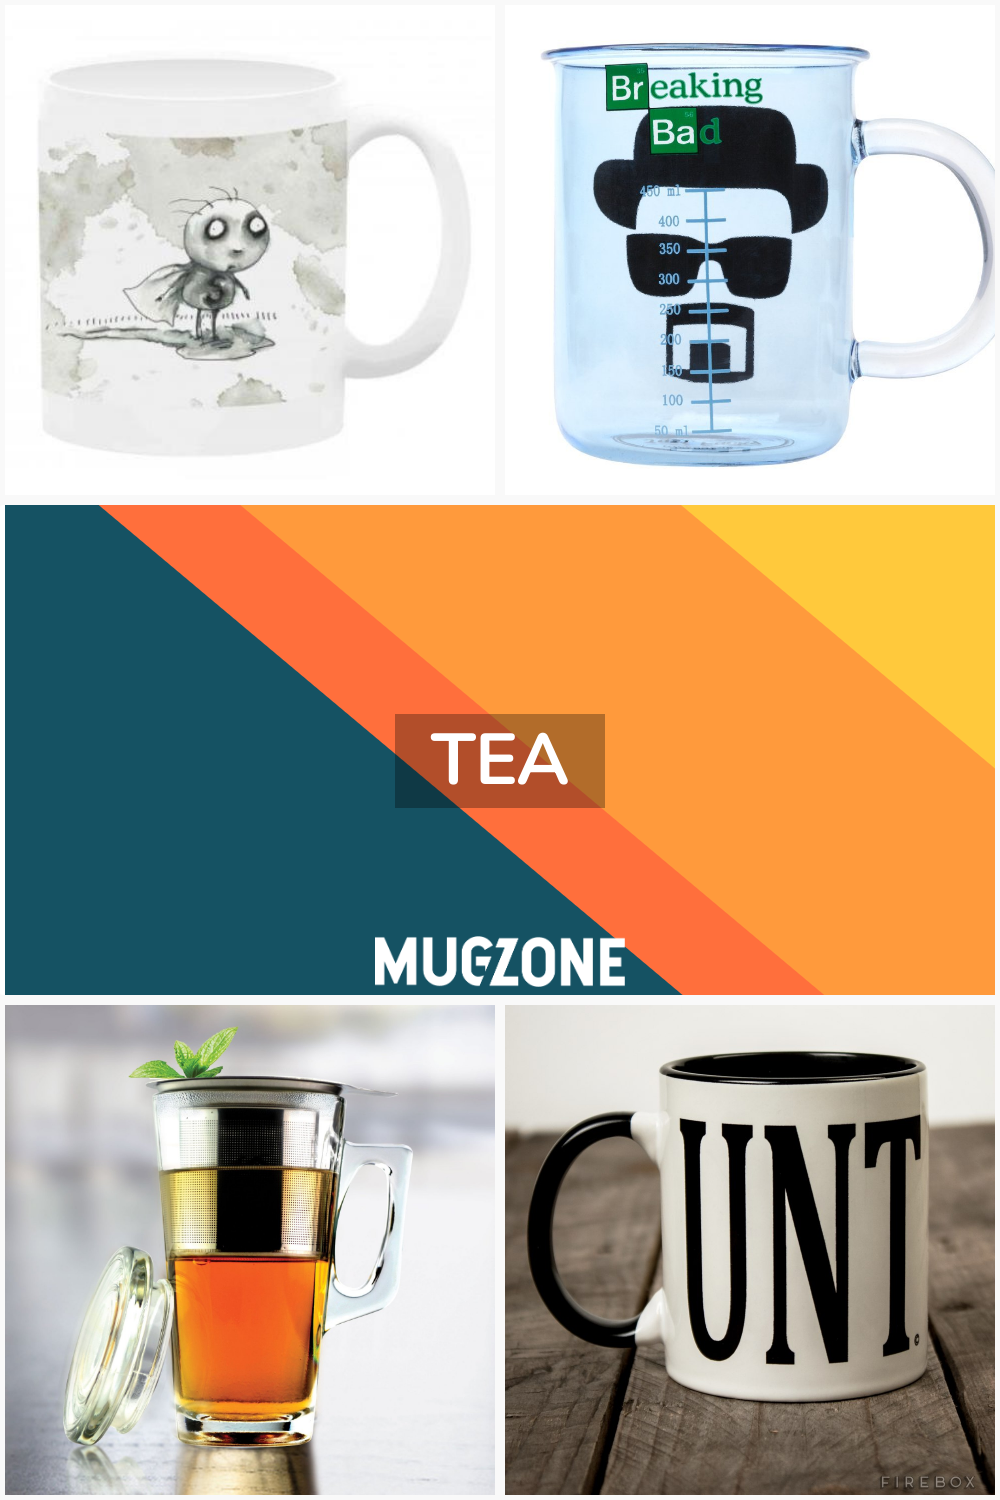 Tea // Mug Zone